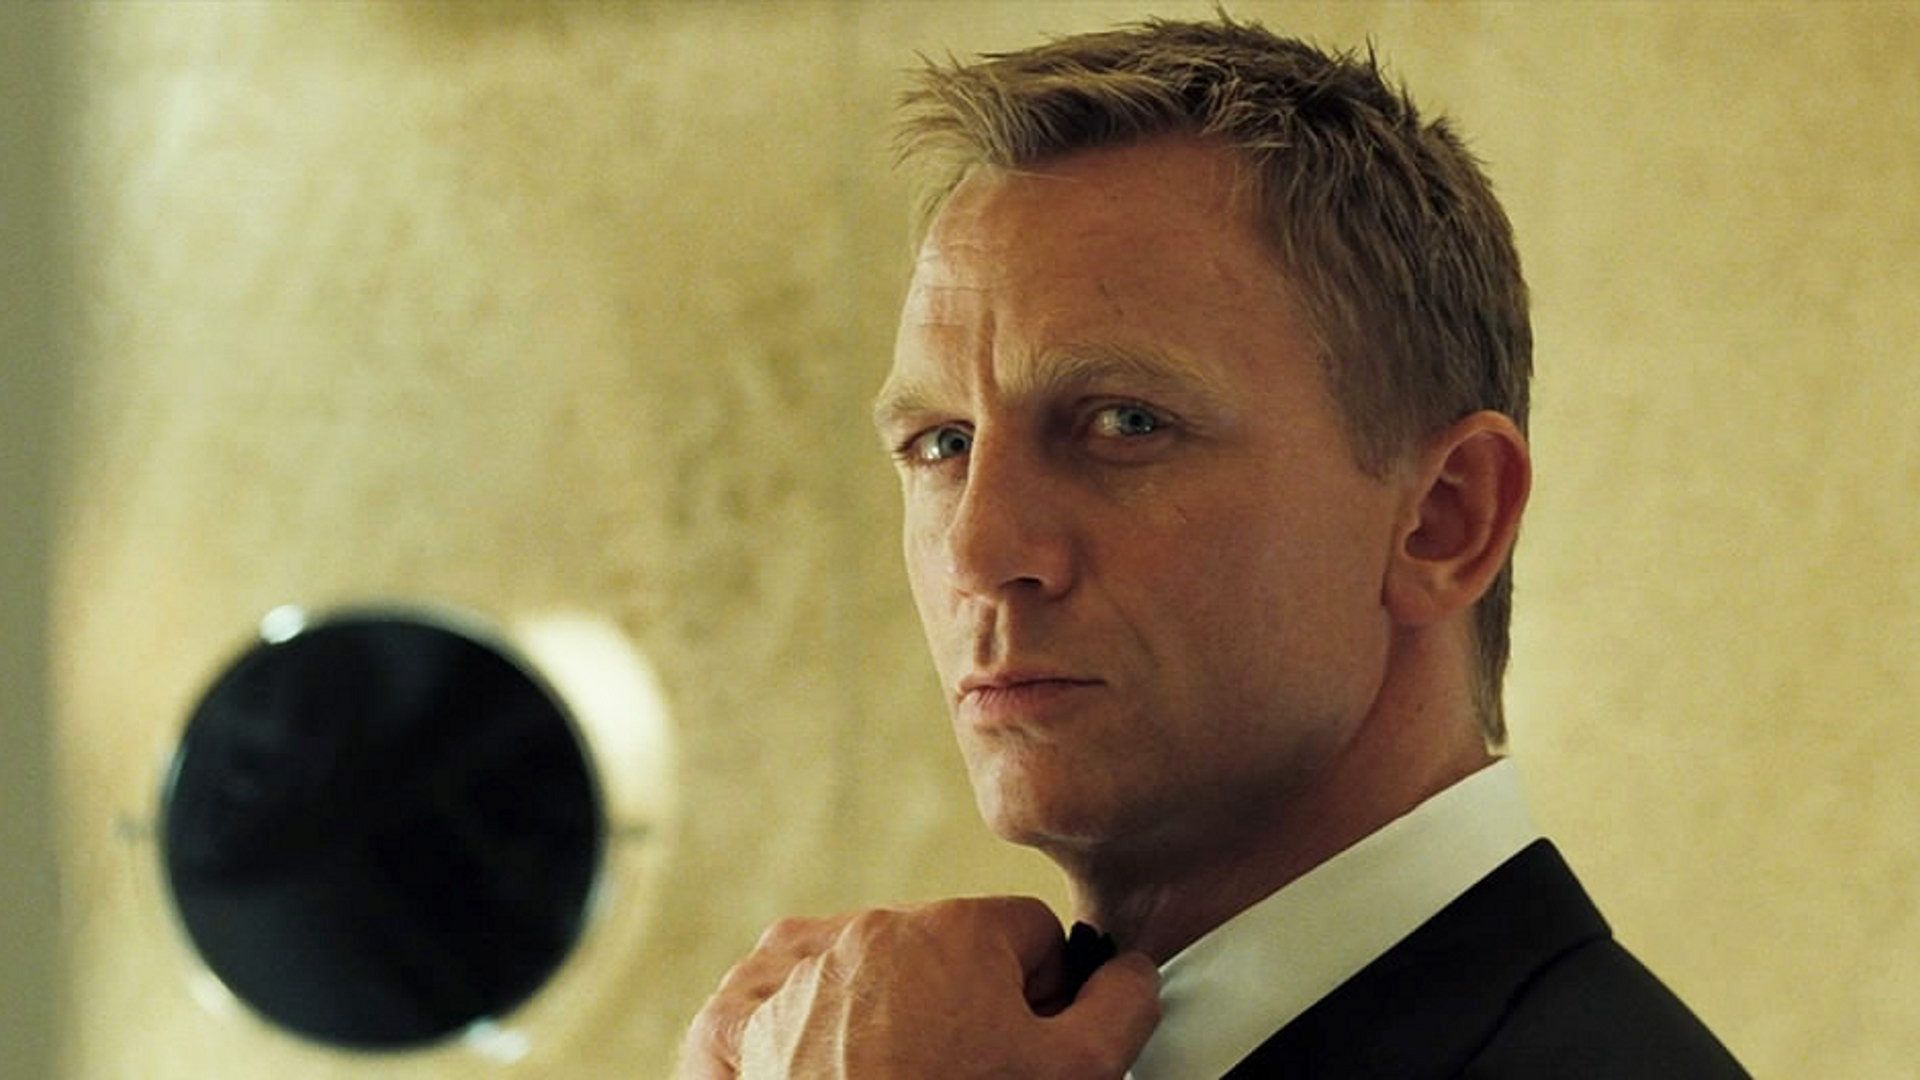 Daniel Craig Or Pierce Brosnan: Who Is The Best James Bond?